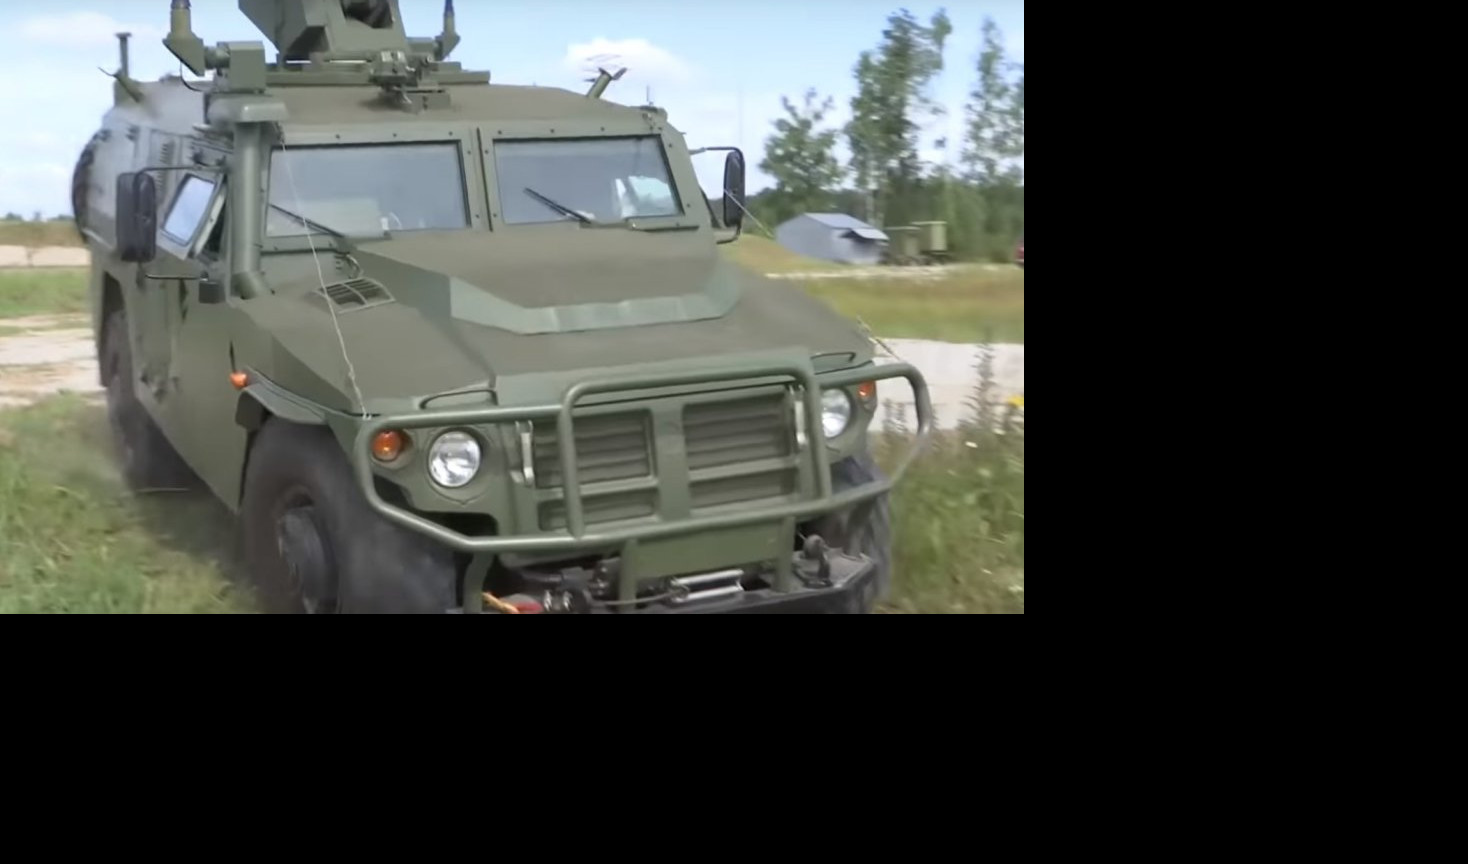 OVO JE GIBKA, NOVI RUSKI PROTIVVAZDUŠNI SISTEM! Uspešno testiran novi mobilni oklopni kompleks! (VIDEO)